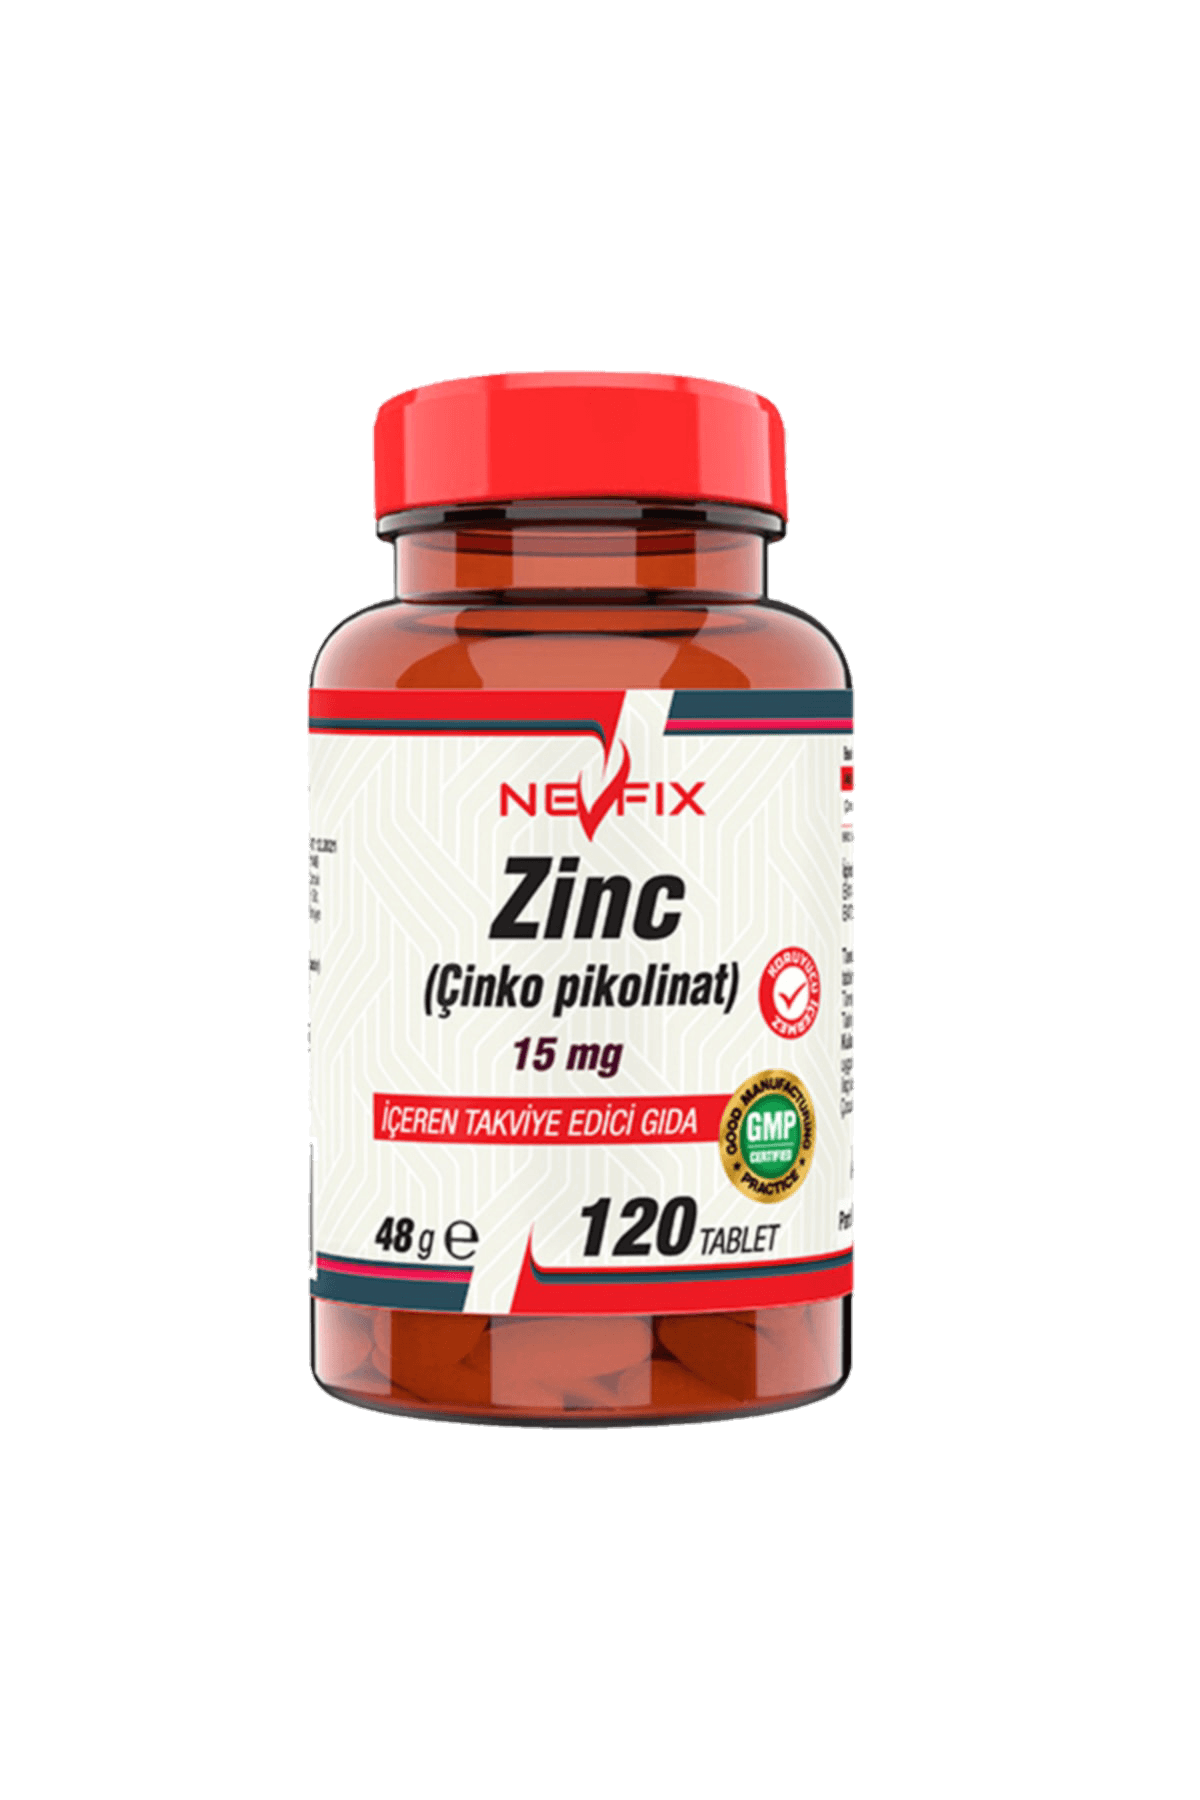 Zinc Poicolinate 120 Servings - The Supplements Factory